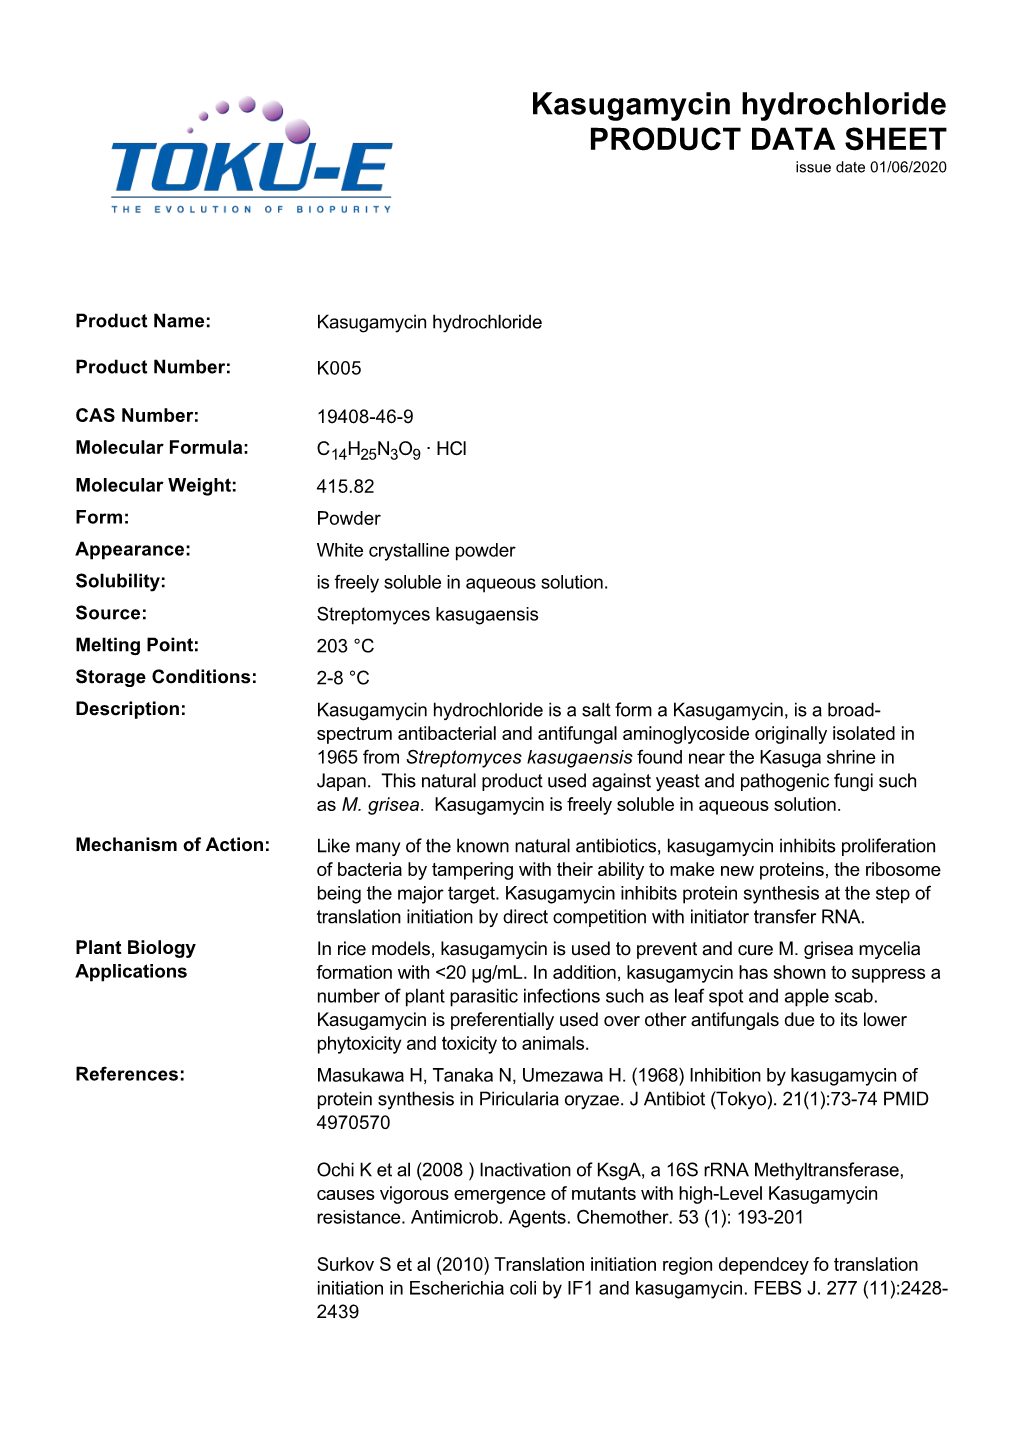 Kasugamycin Hydrochloride PRODUCT DATA SHEET Issue Date 01/06/2020